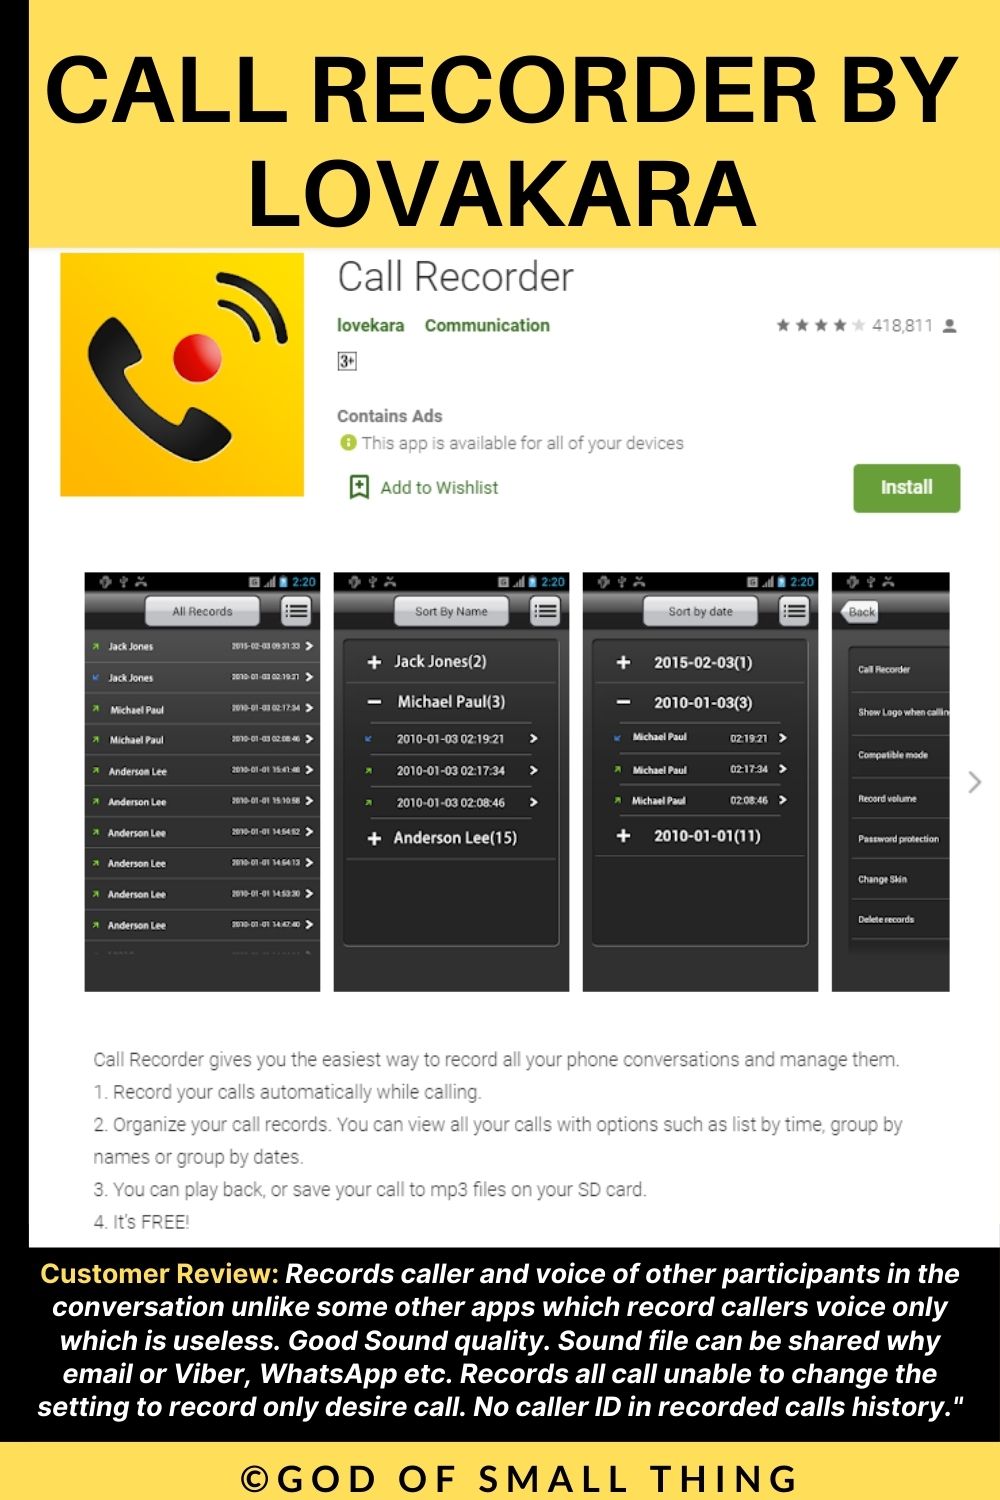 Call recorder by lovakara